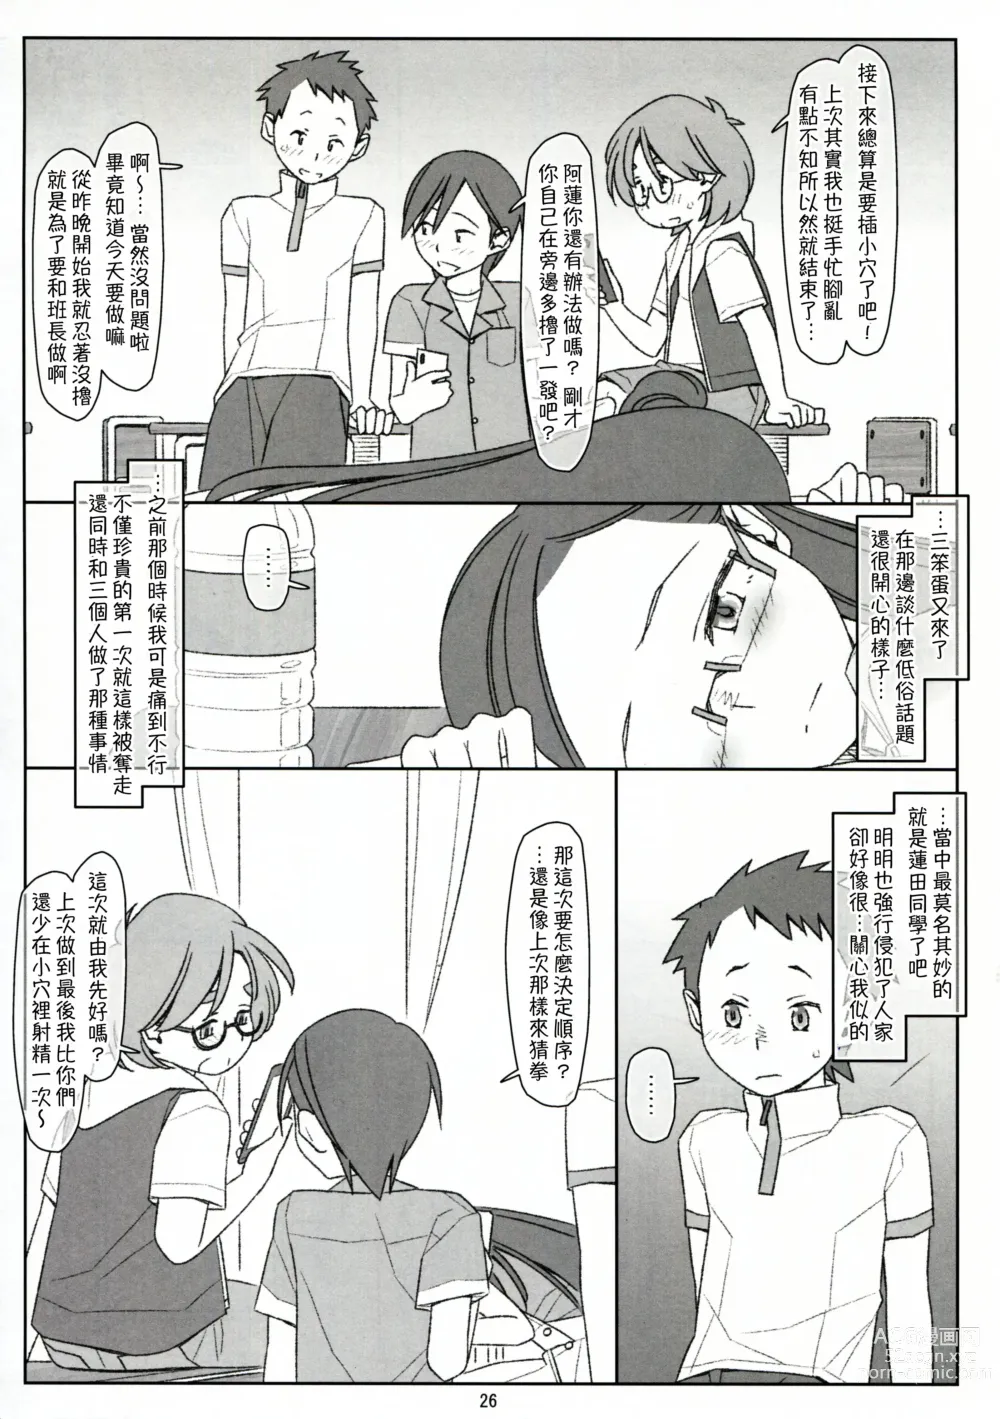 Page 26 of doujinshi Bokutachi no Super App ③ + ④